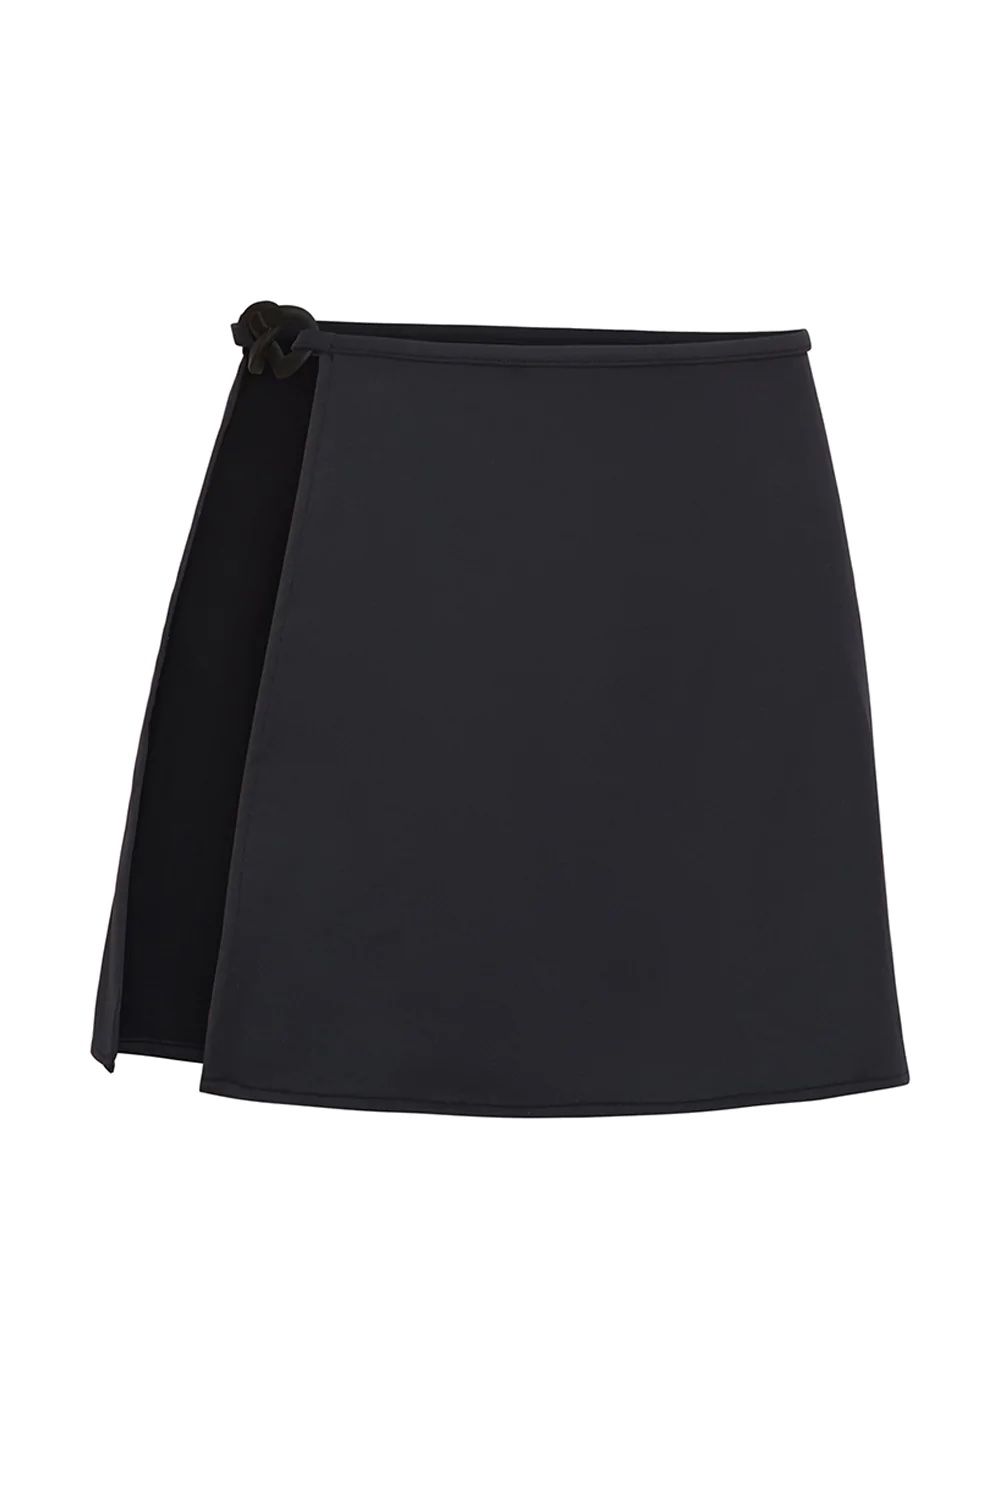 Mia Black Terra Skirt